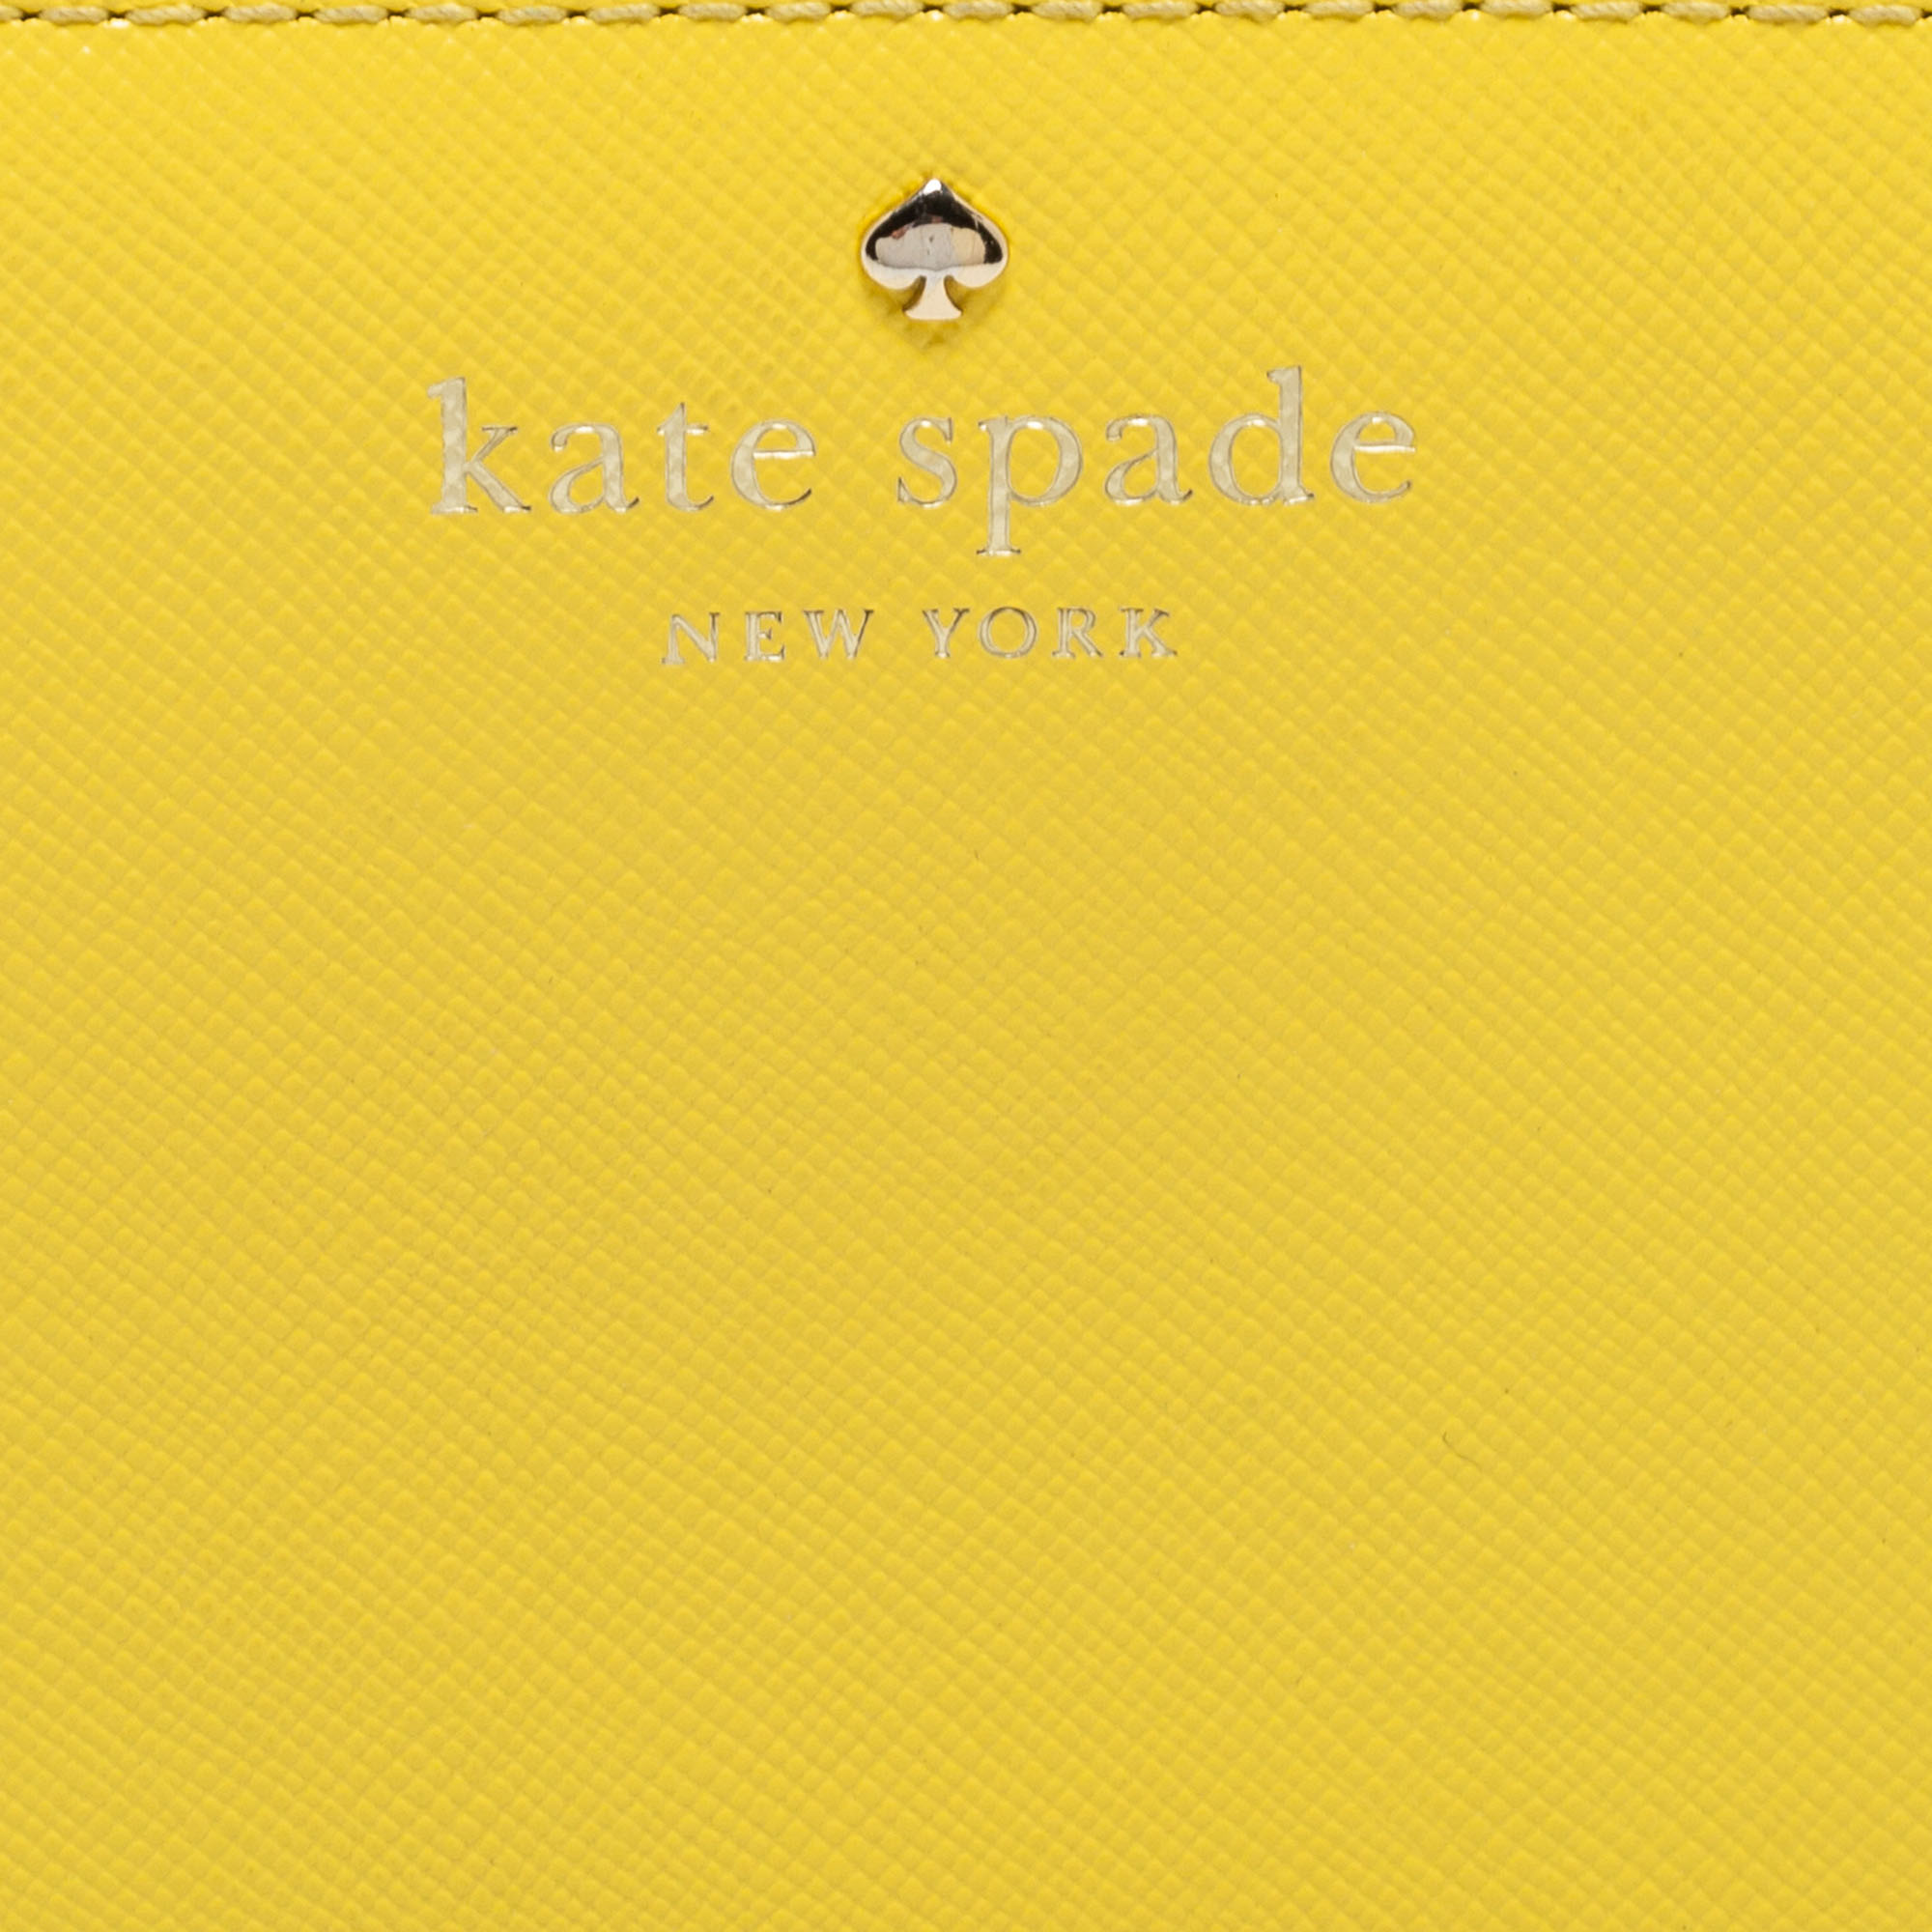 Kate Spade Yellow Leather Zip Around Wallet